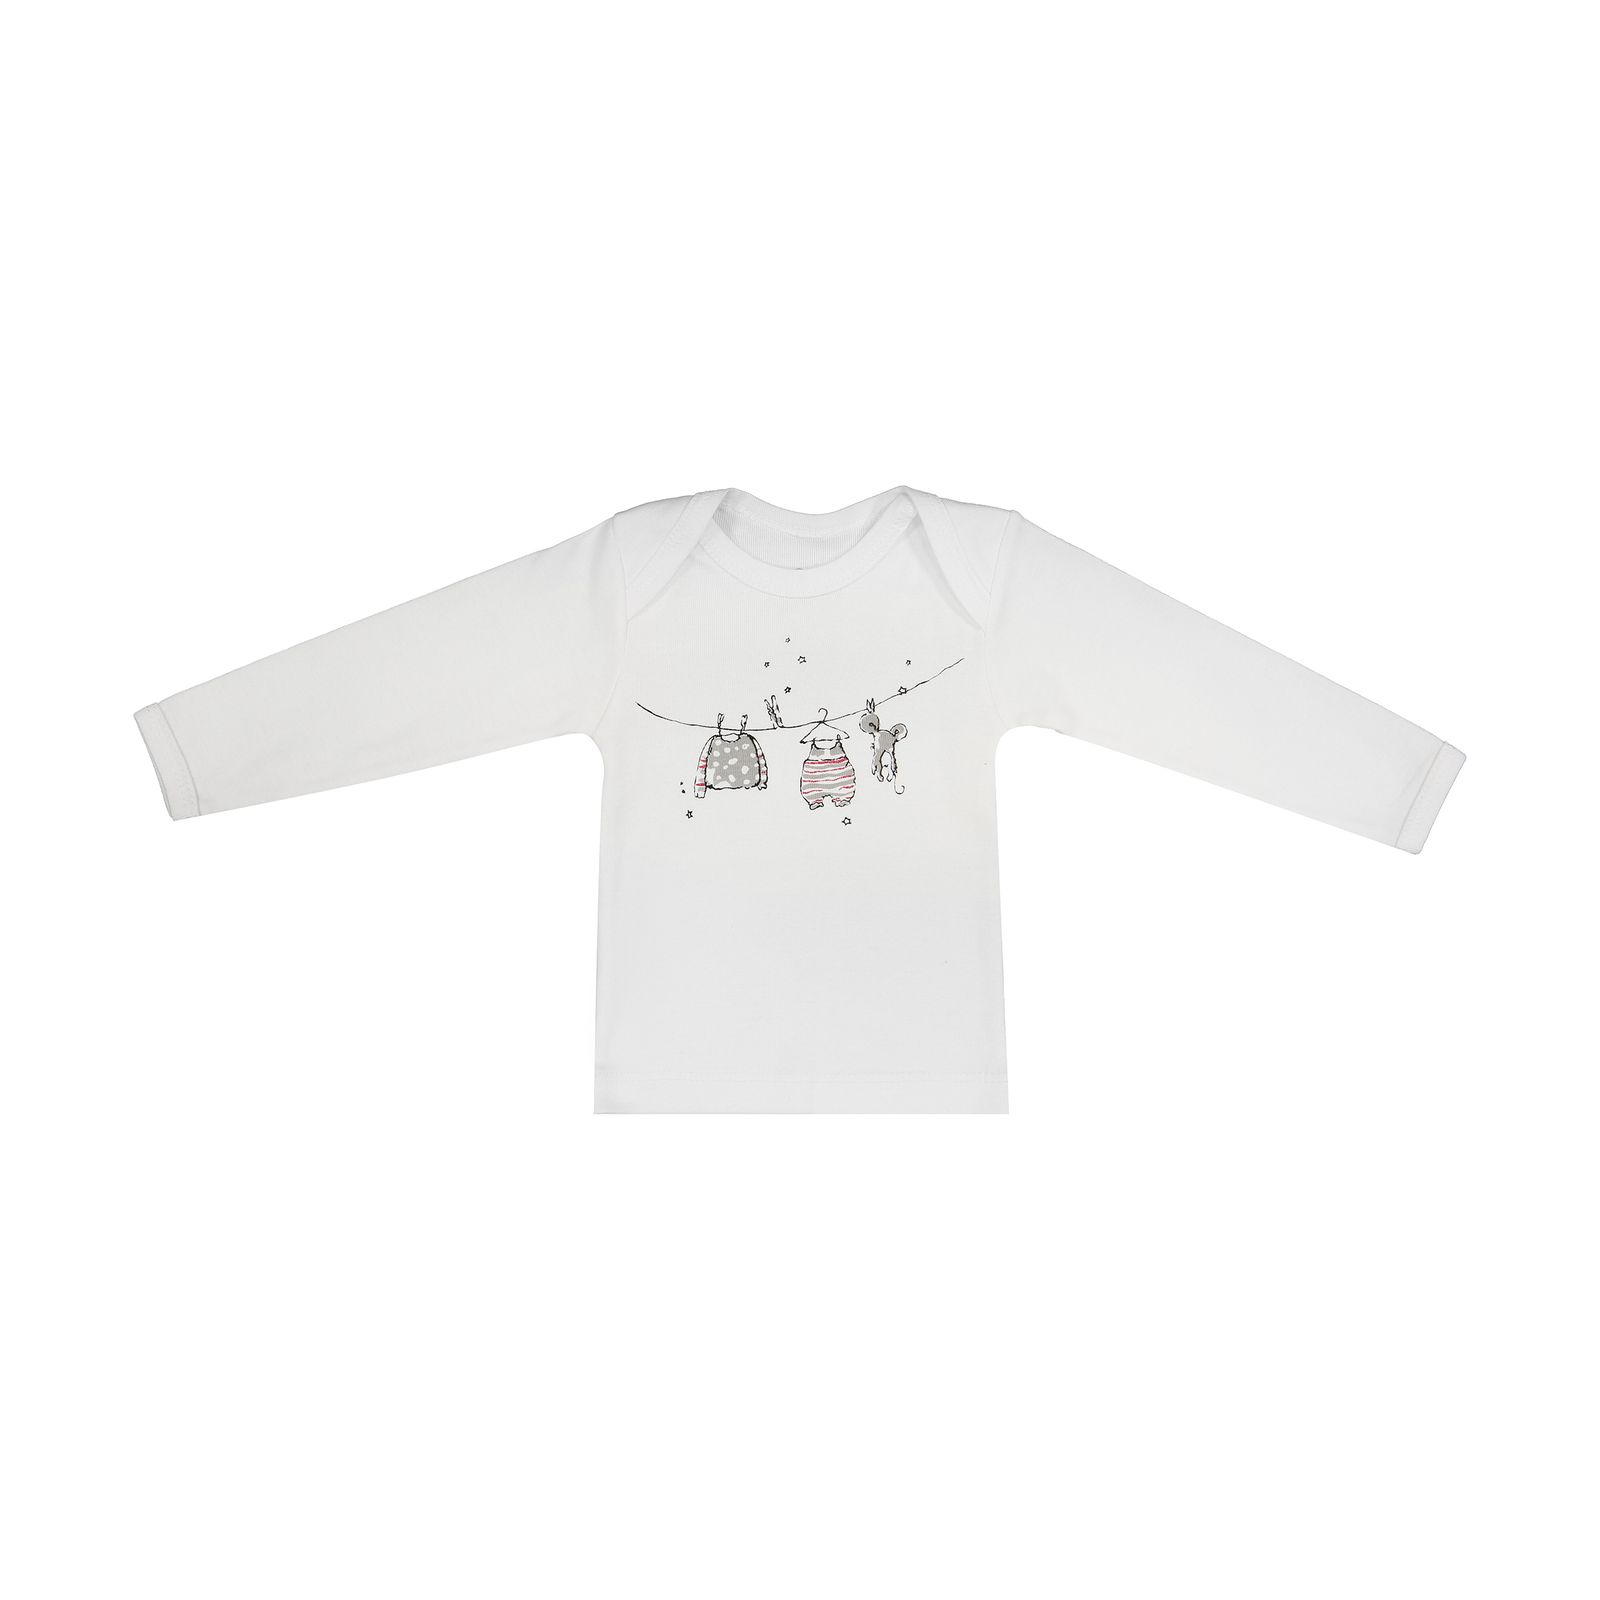 تی شرت نوزادی سون پون مدل 1391213-01 -  - 1